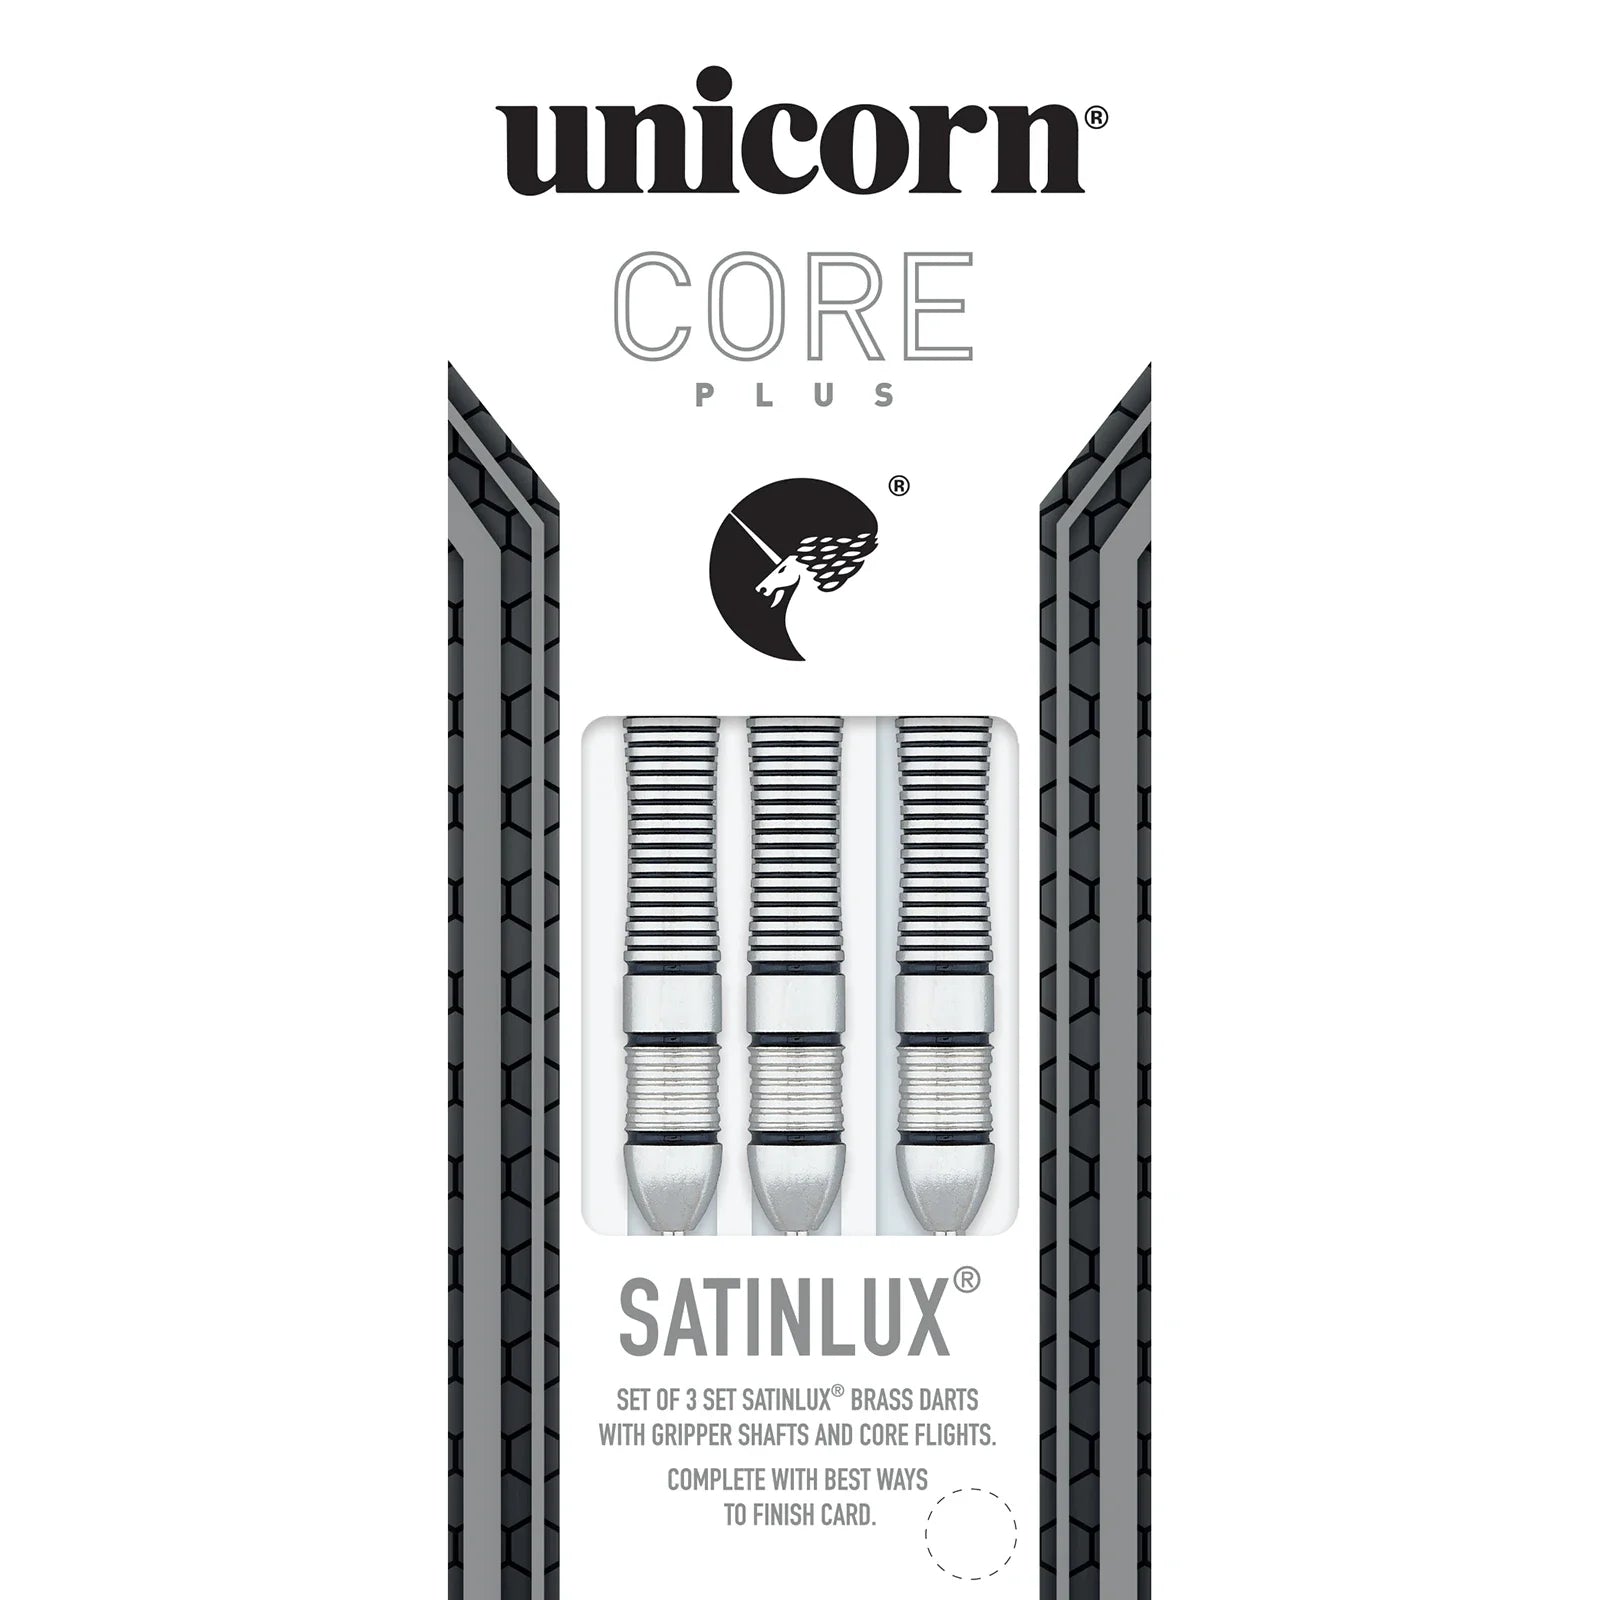 Unicorn Core Plus Satinlux 22g Darts